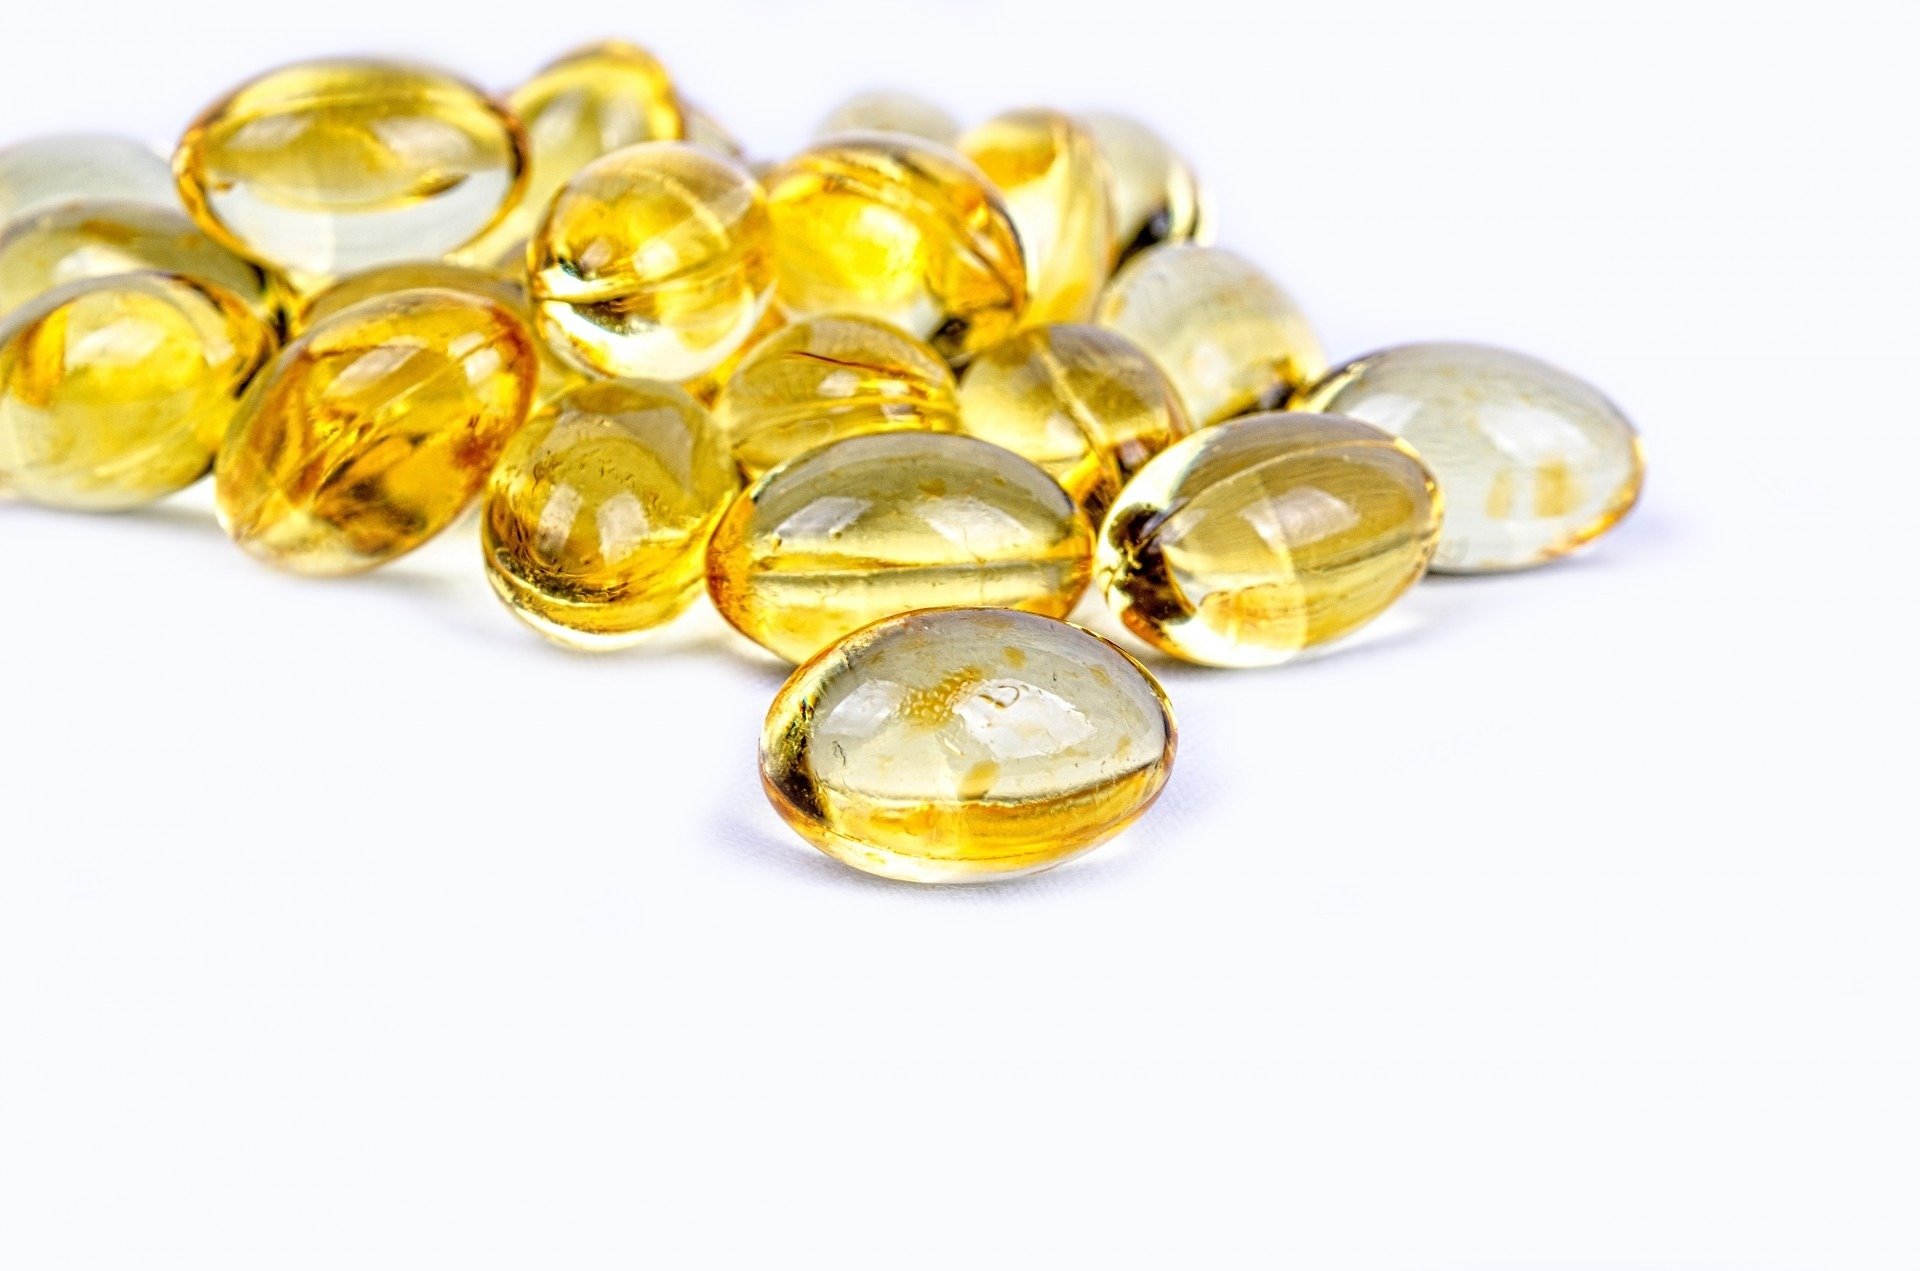 Vitamin D supplements do not prevent bone fractures in children, finds study